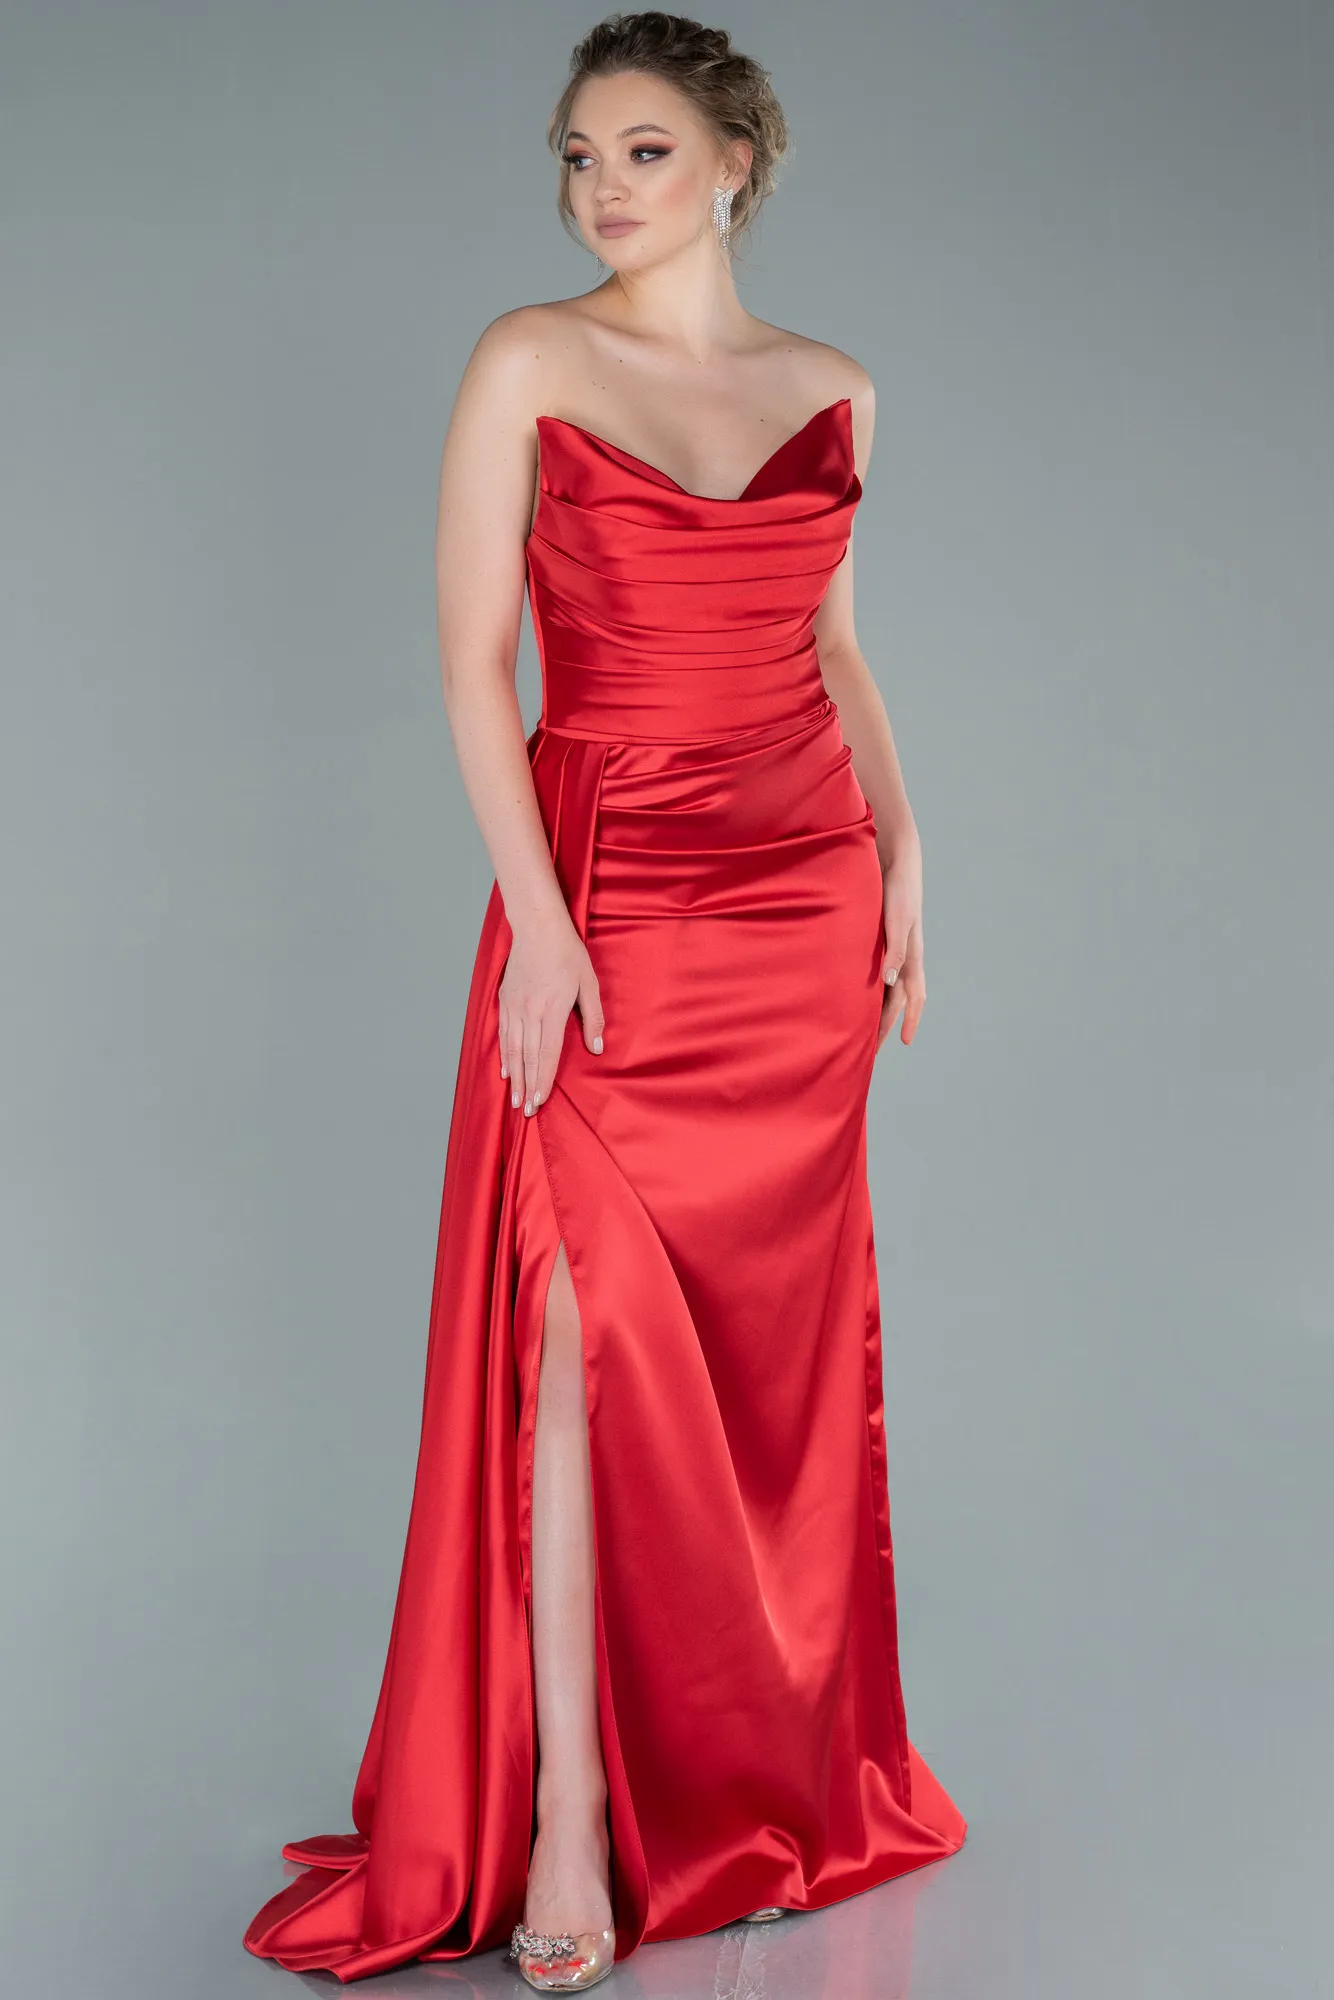 Red-Mermaid Evening Dress ABU3443